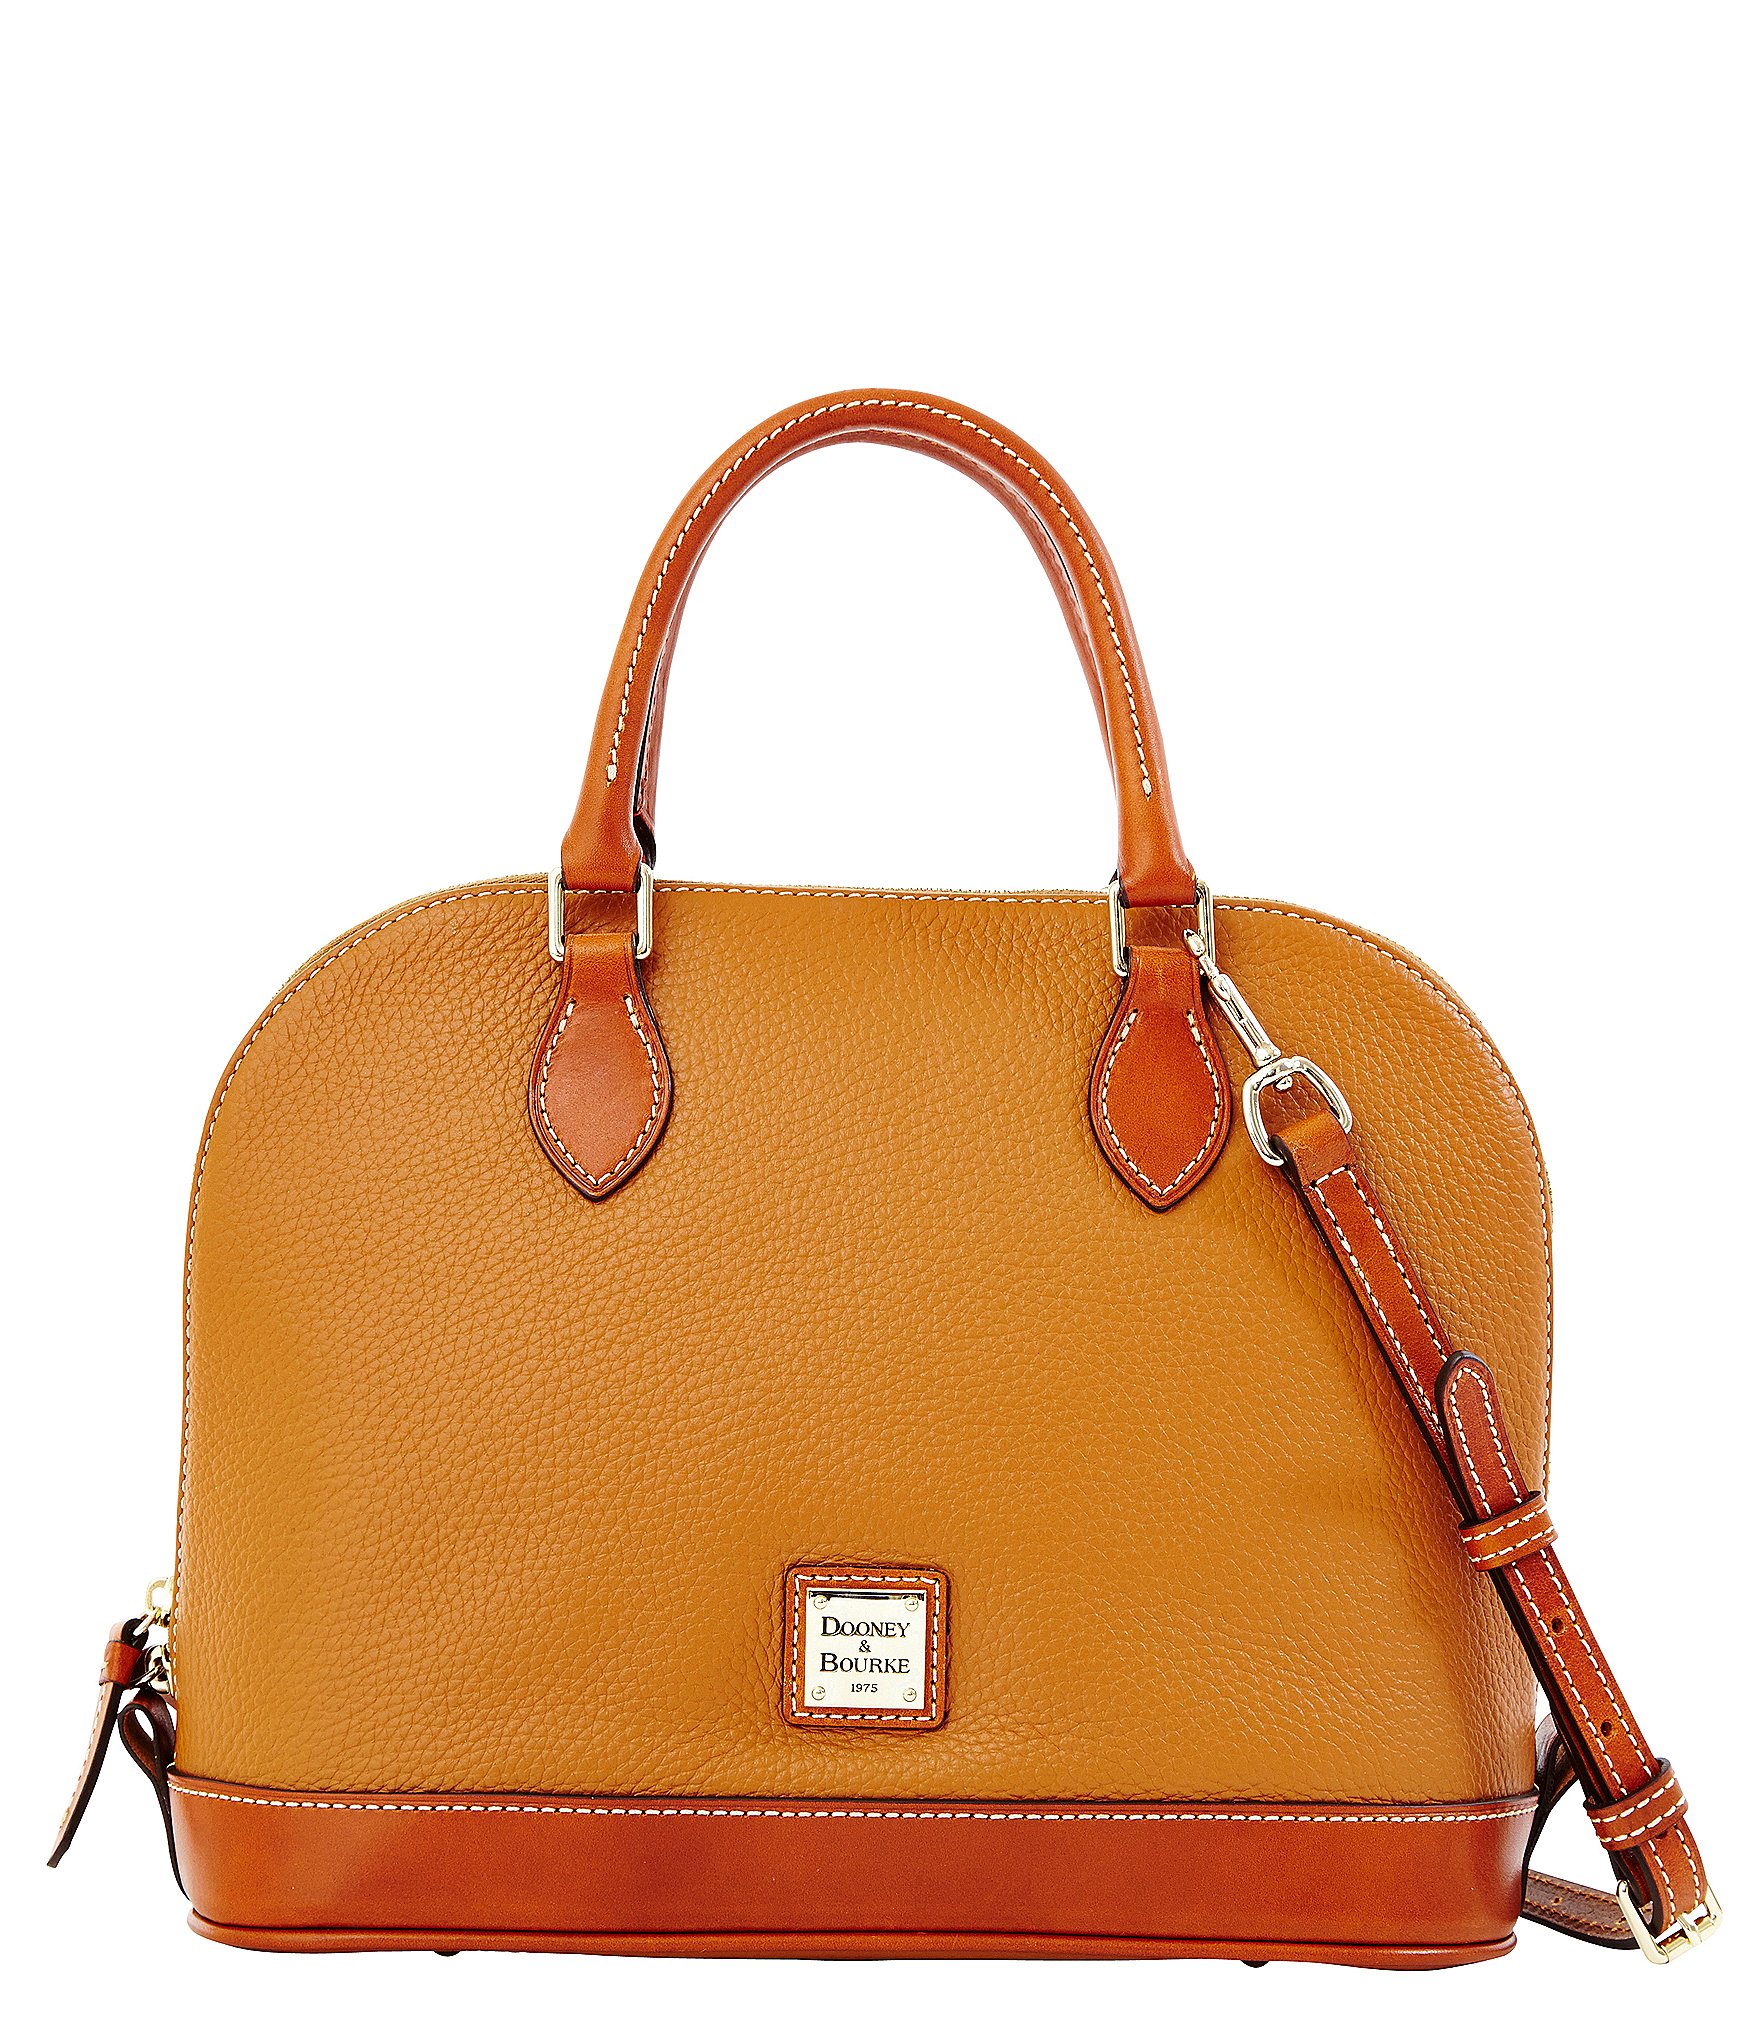 DOONEY & BOURKE Yellow Satchel Handbag the latest.